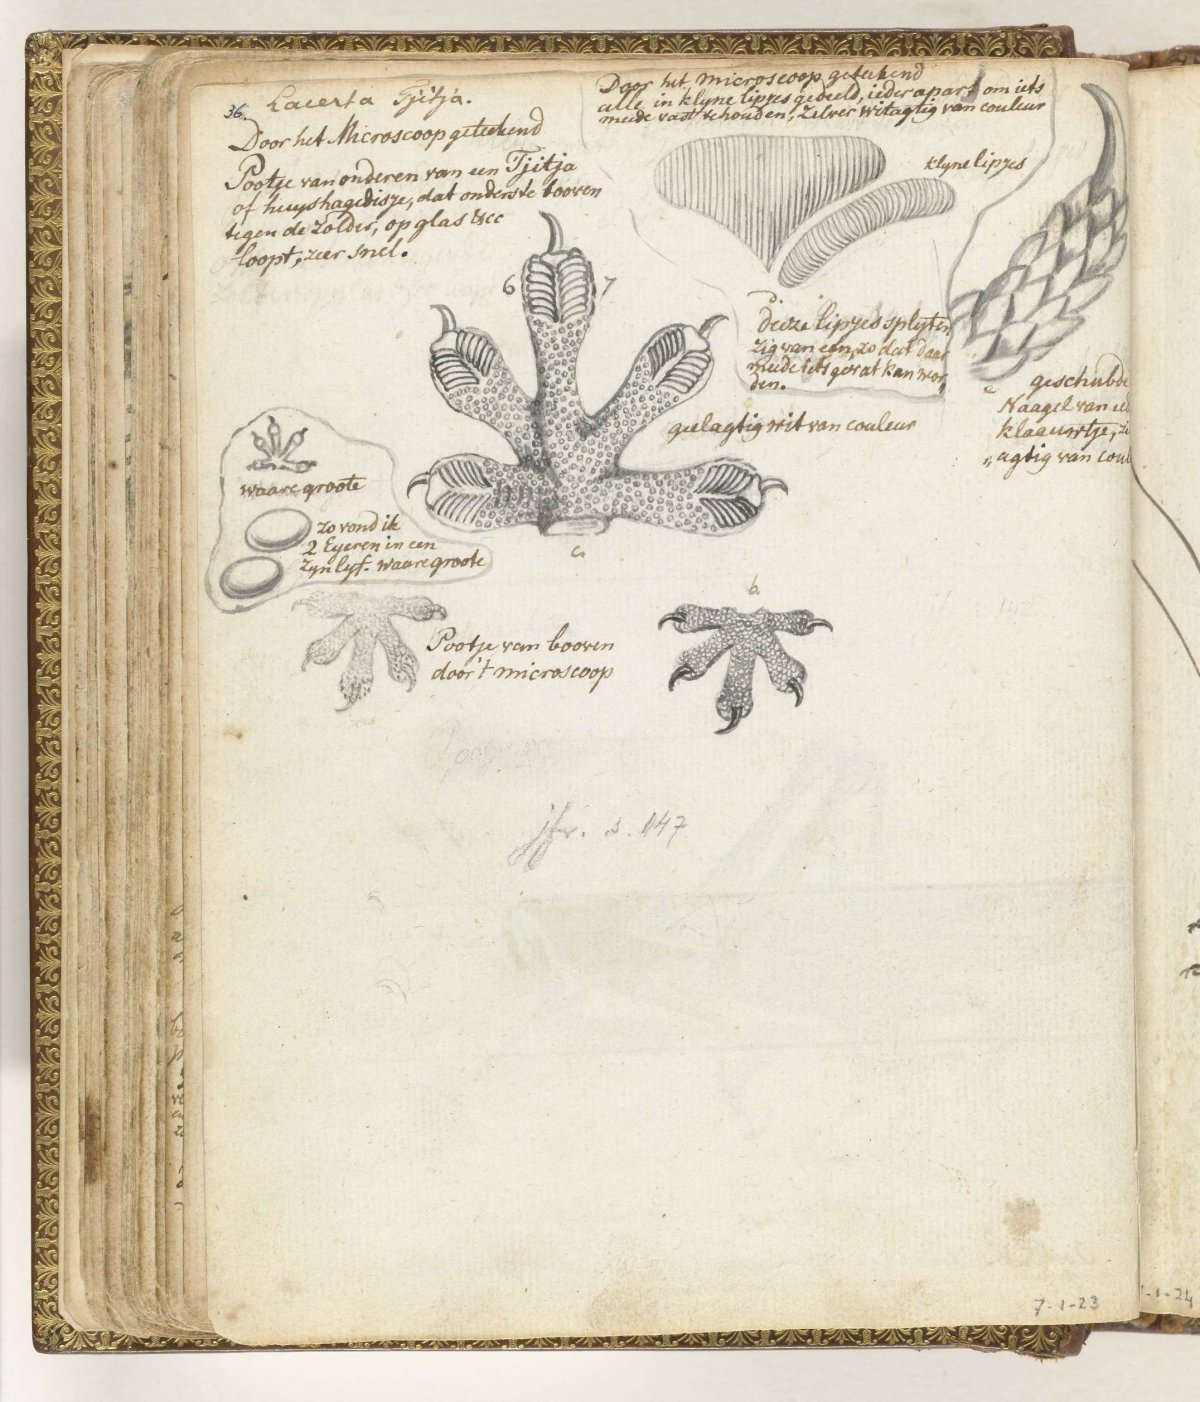 Paw of tjitjak or house gecko, Jan Brandes, 1784